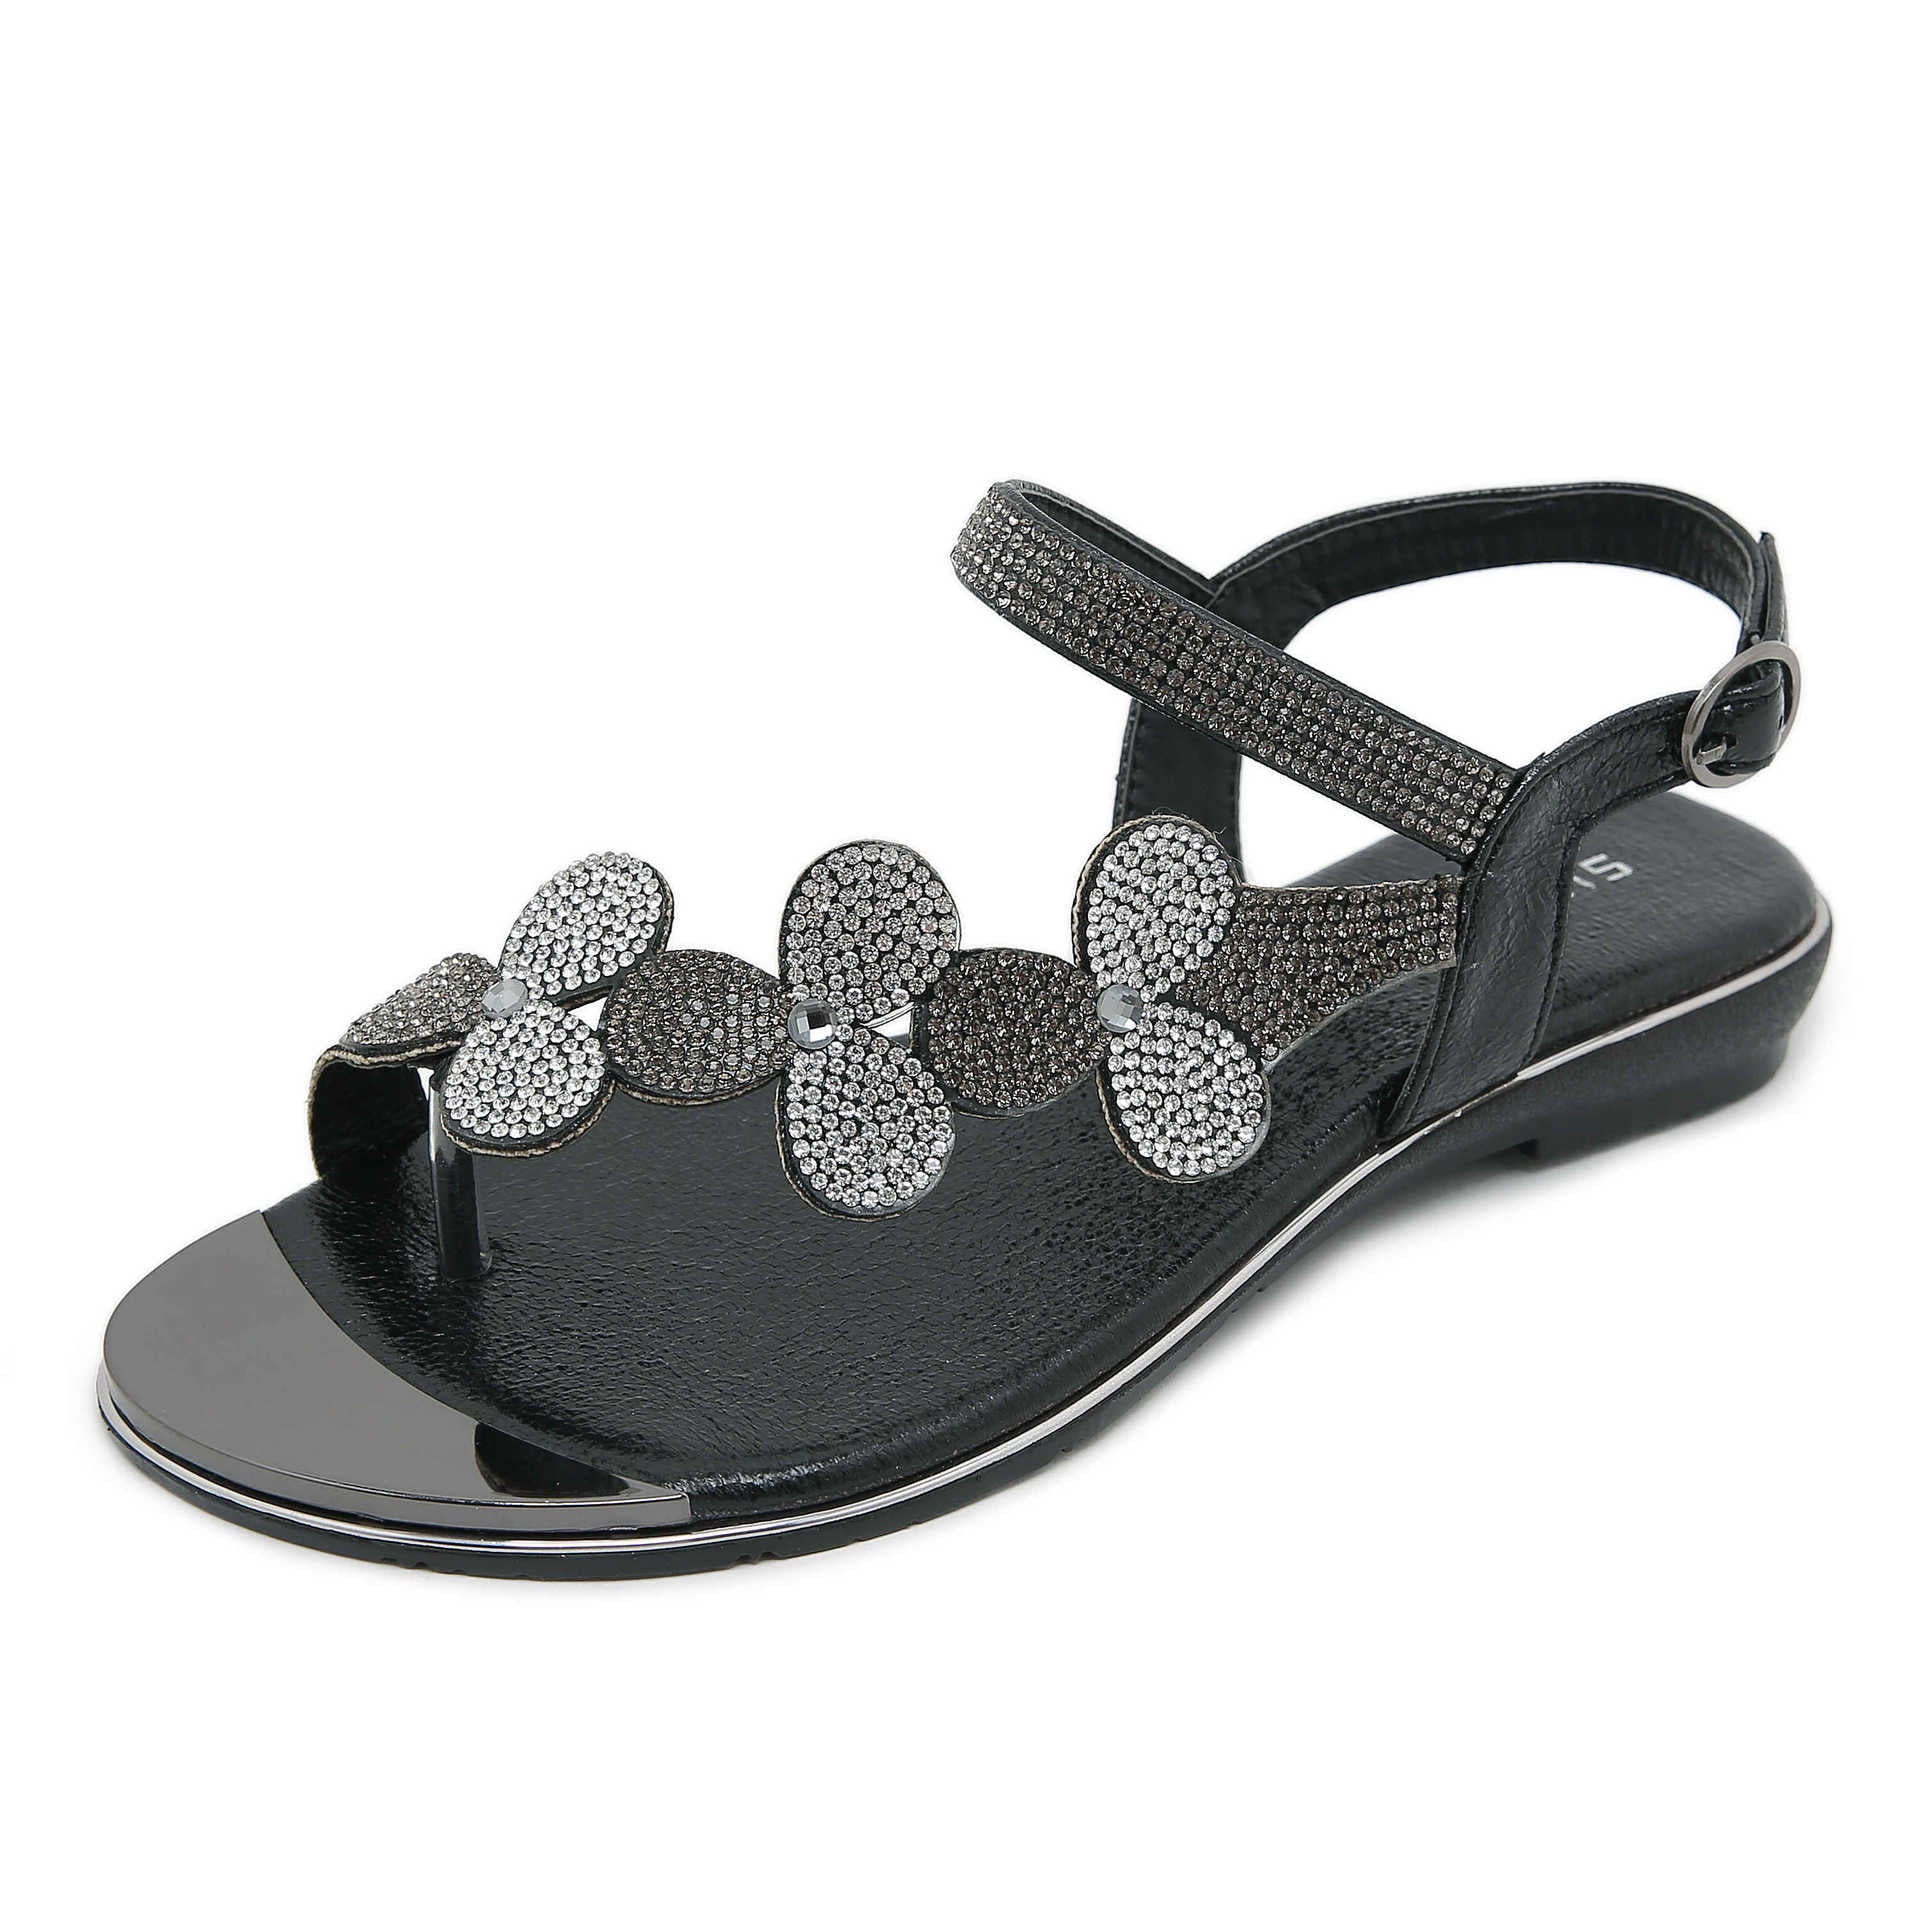 Owlkay Rhinestone Comfortable Versatile Flat Sandals